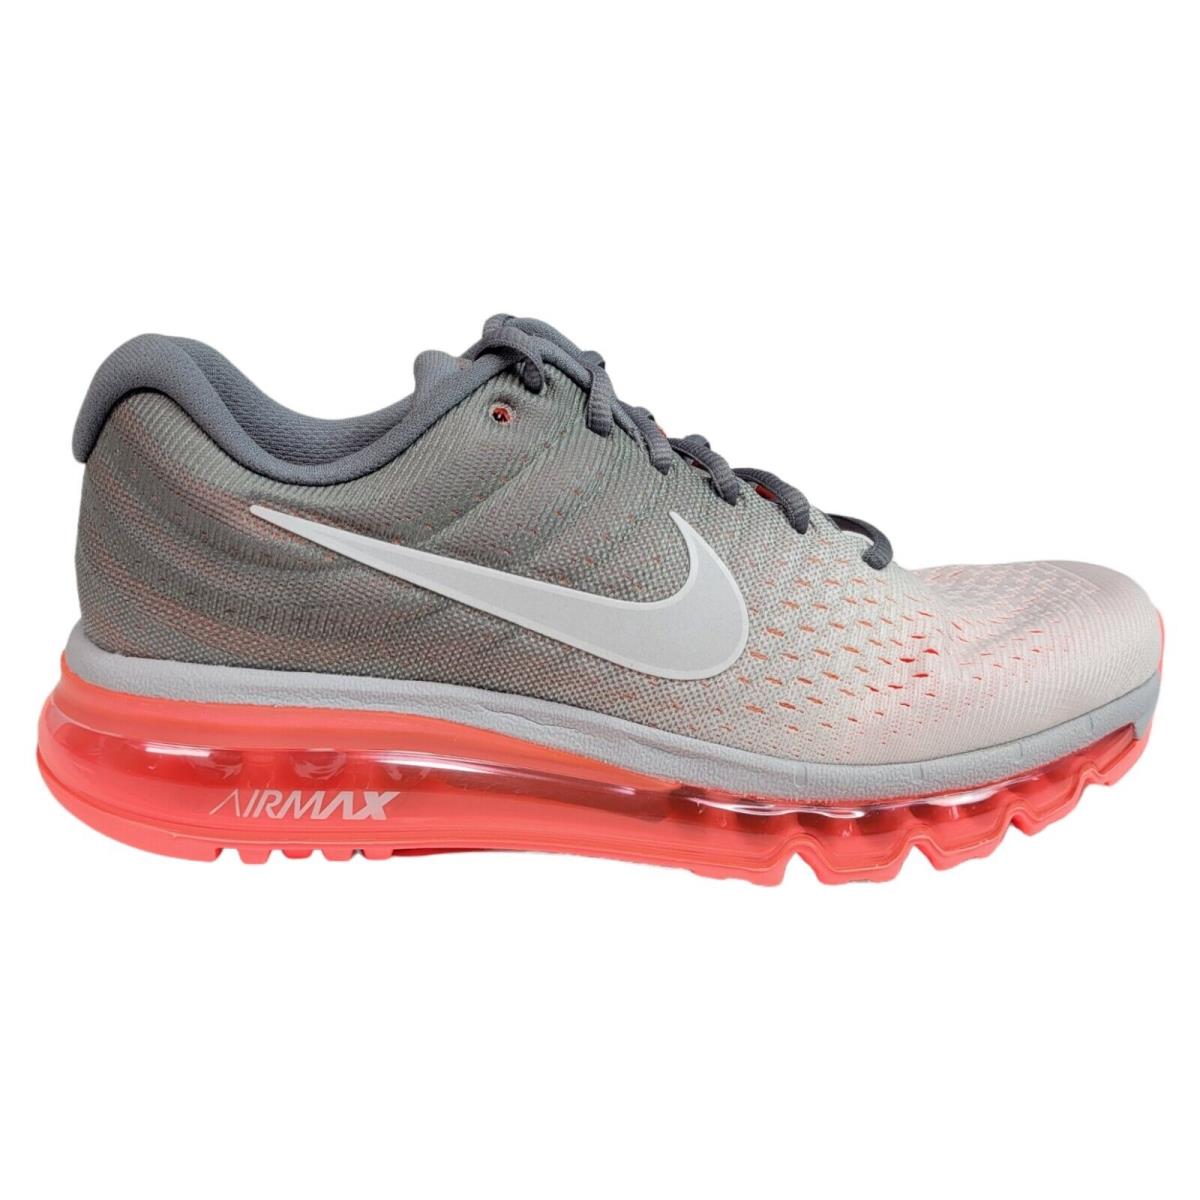 Nike Womens 6.5 7.5 Air Max 2017 Hot Lava Pink Platinum Running Shoes 849560-007